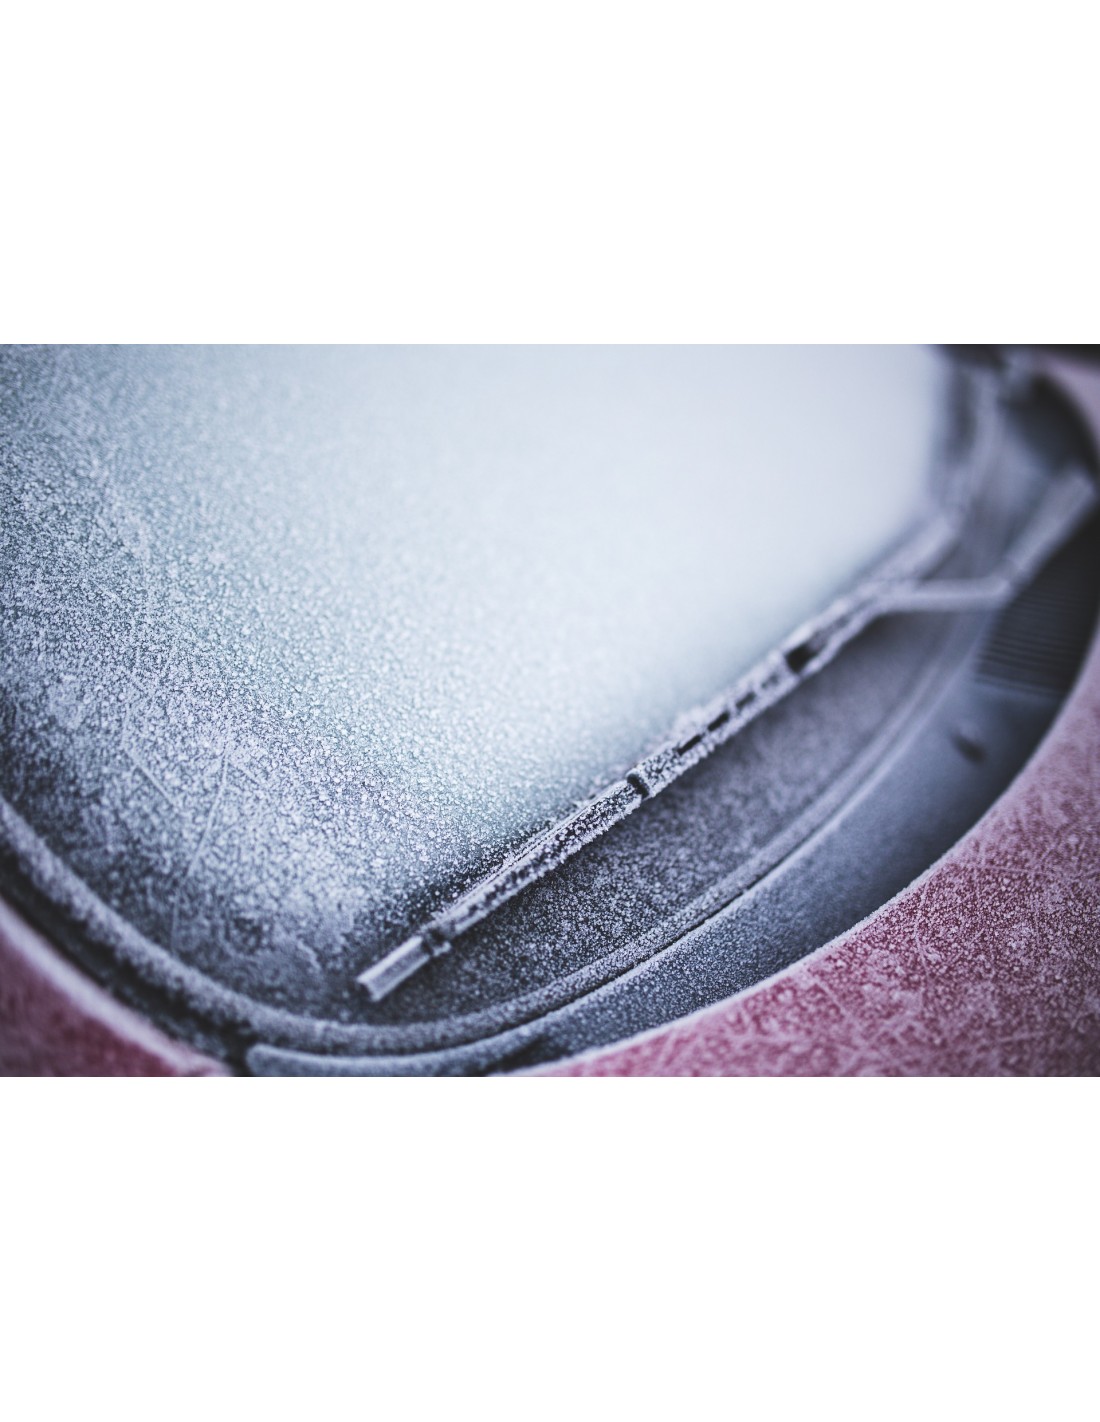 Lave glace OCL LAVE GLACE -20°C HIVER Carton 4x5L